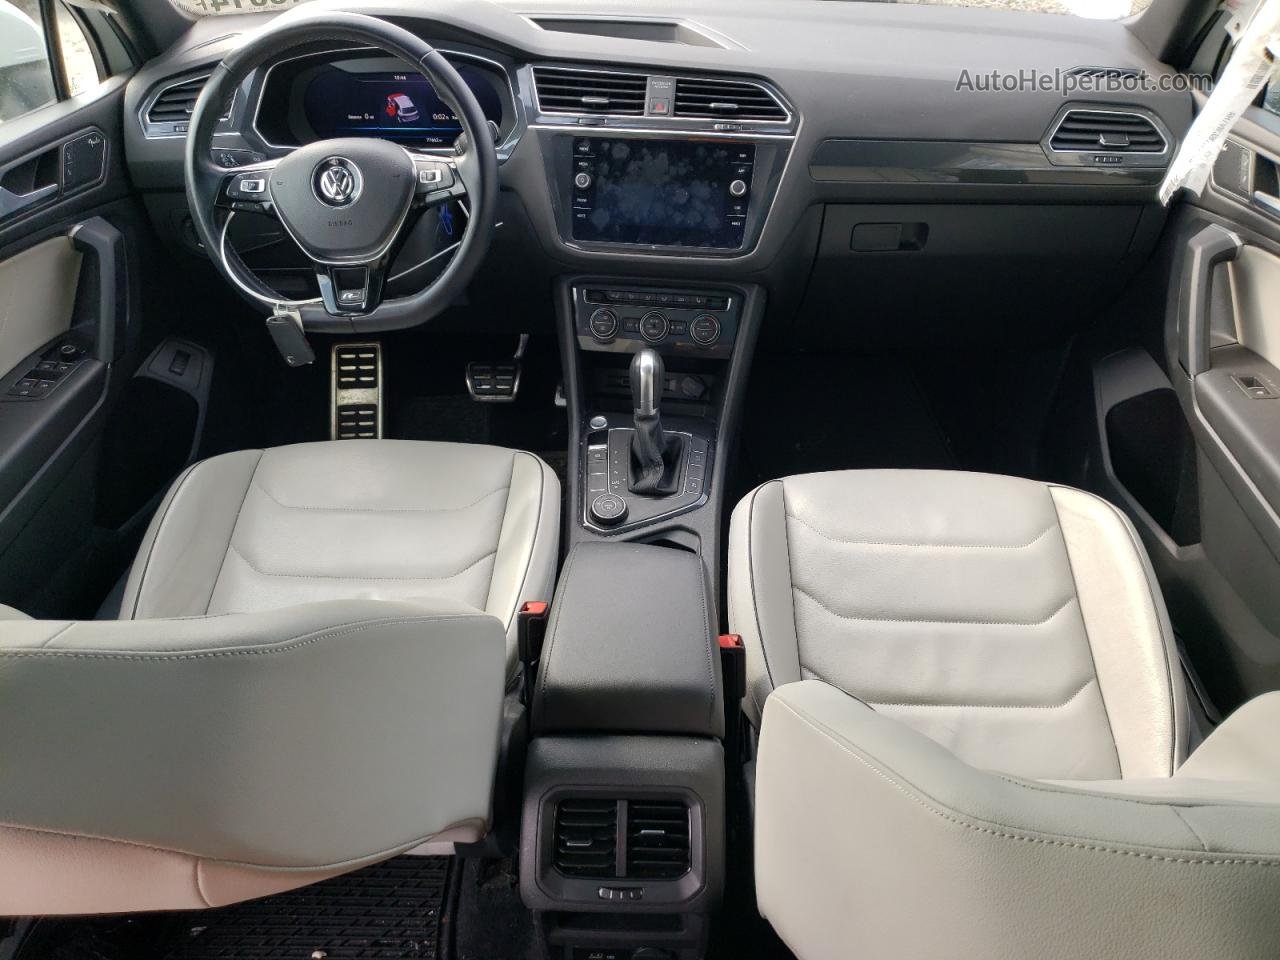 2019 Volkswagen Tiguan Sel Premium Белый vin: 3VV4B7AXXKM007068